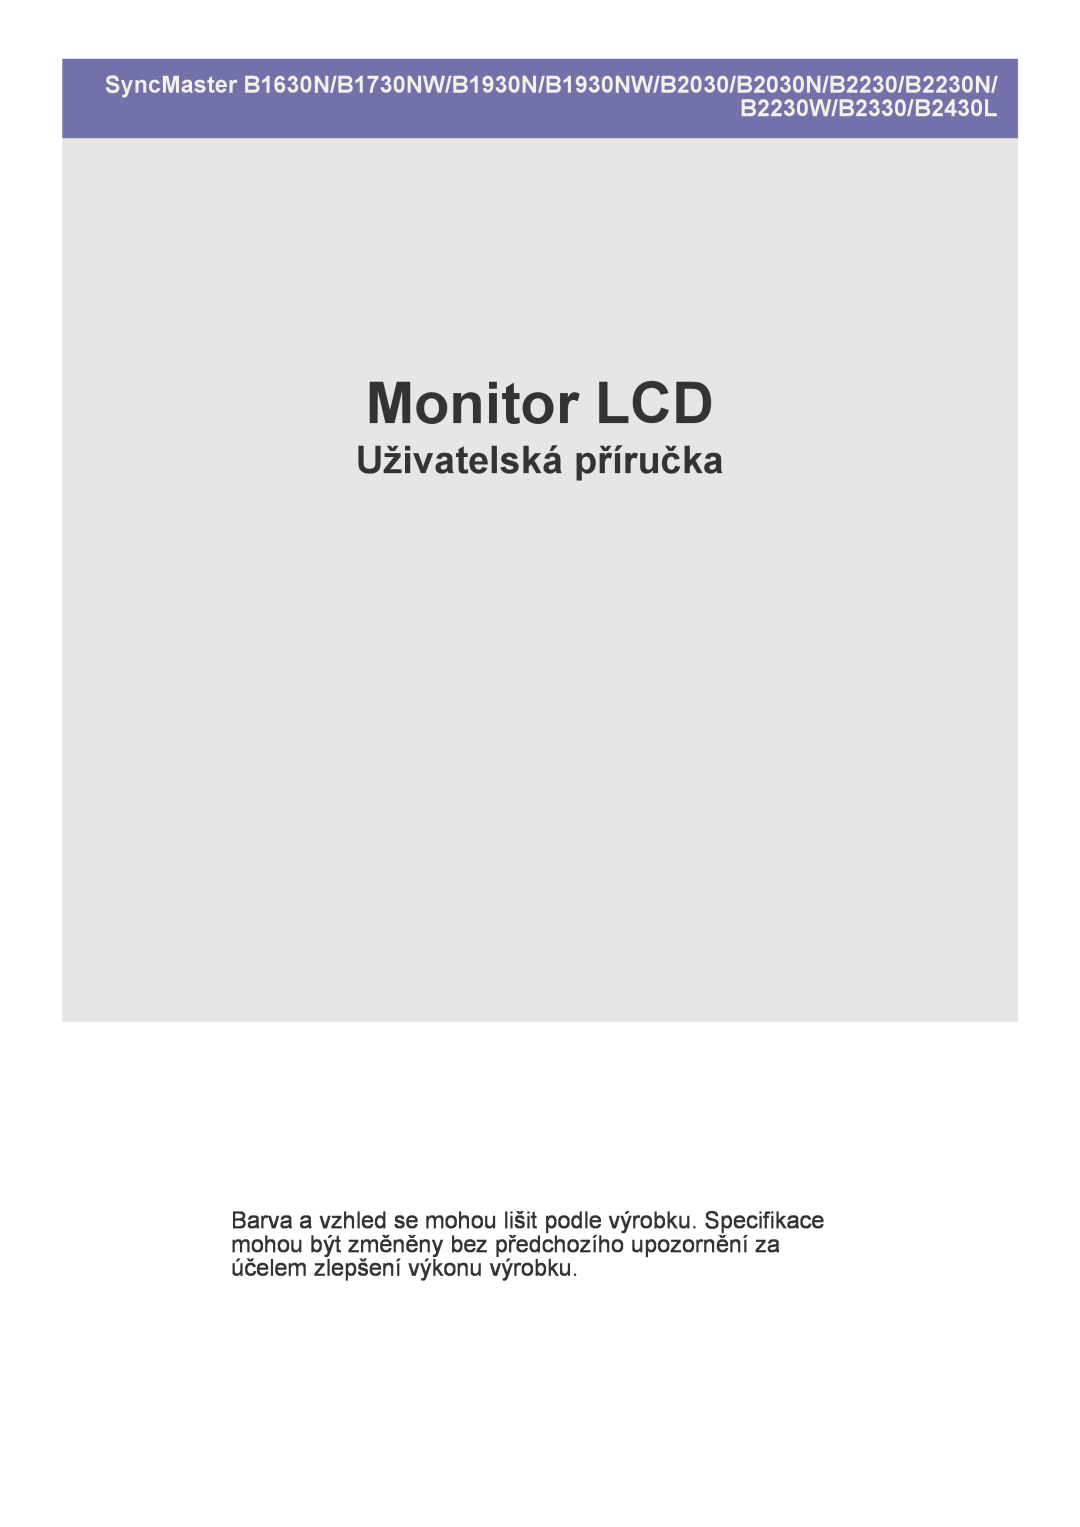 Samsung LS22PUYKFHEN, LS20PUZKF/EN, LS22PUKKF/EN, LS22PUYKF/EN, LS19PUYKF/EN manual Monitor LCD, Uživatelská příručka 